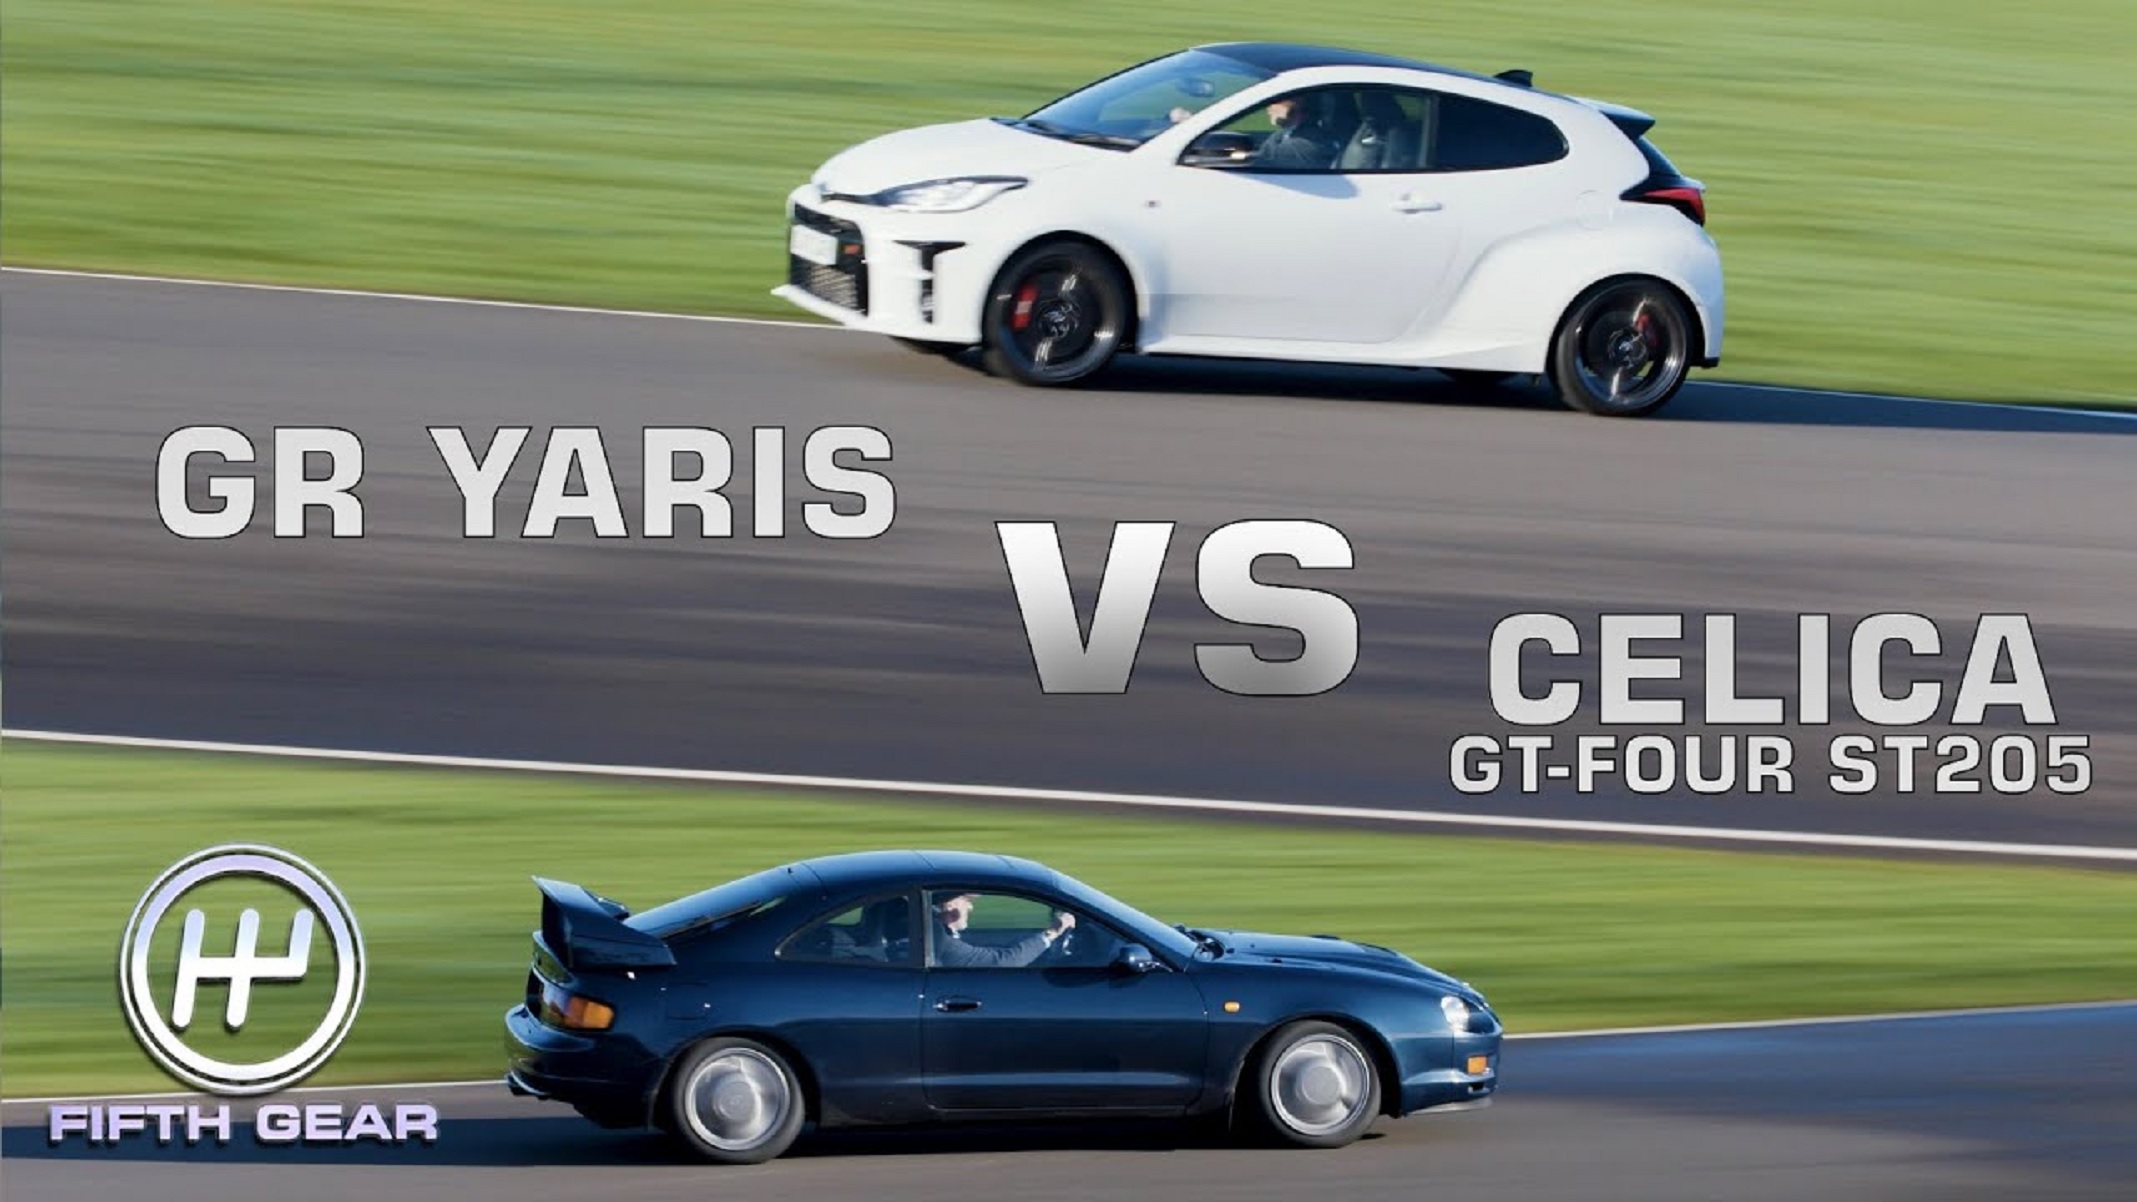 A white 2021 Toyota GR Yaris vs. a black ST205 Toyota Celica GT-Four